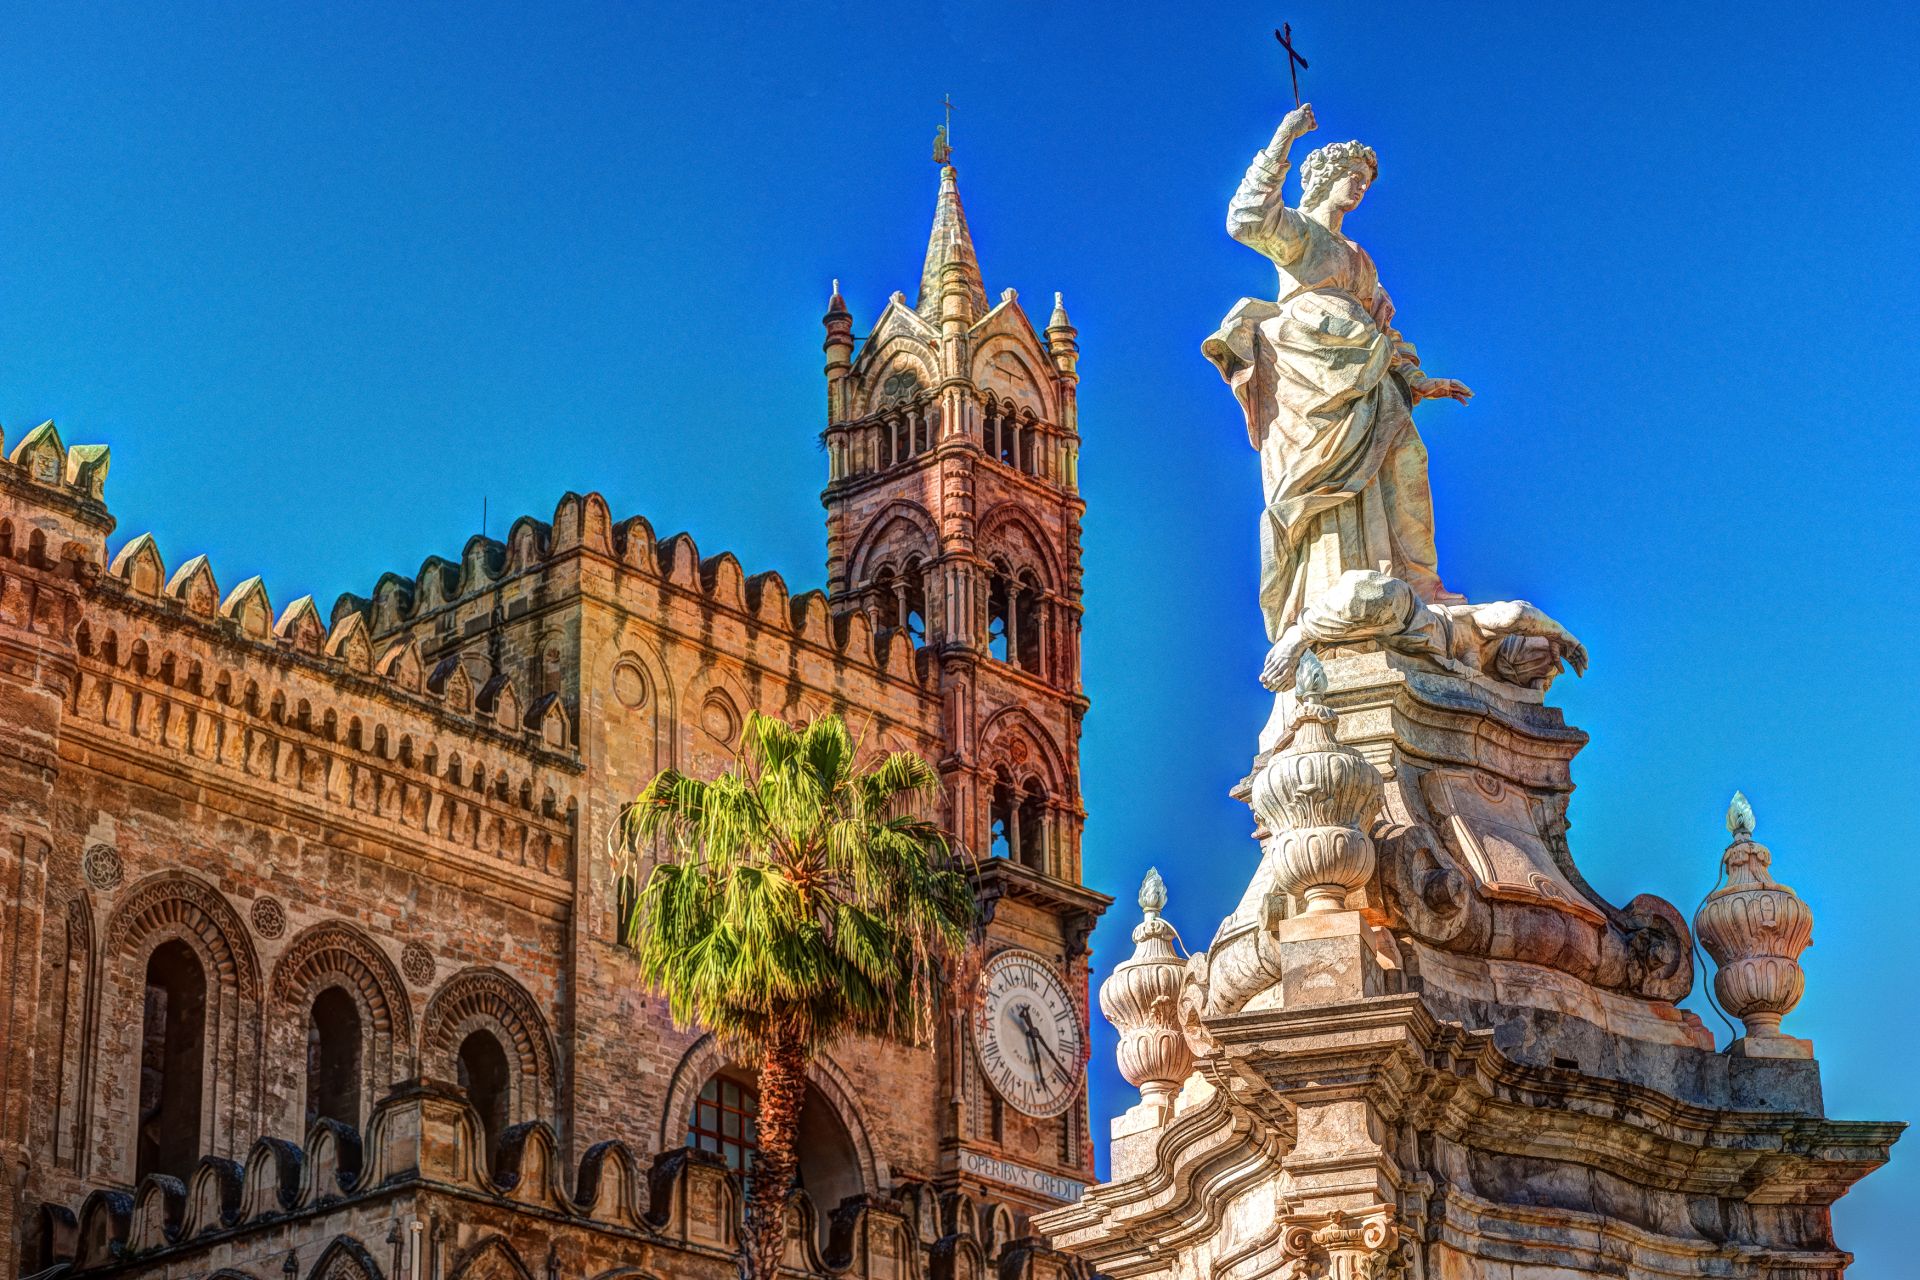 Palermo-Statue-outside-Duomo-Italy